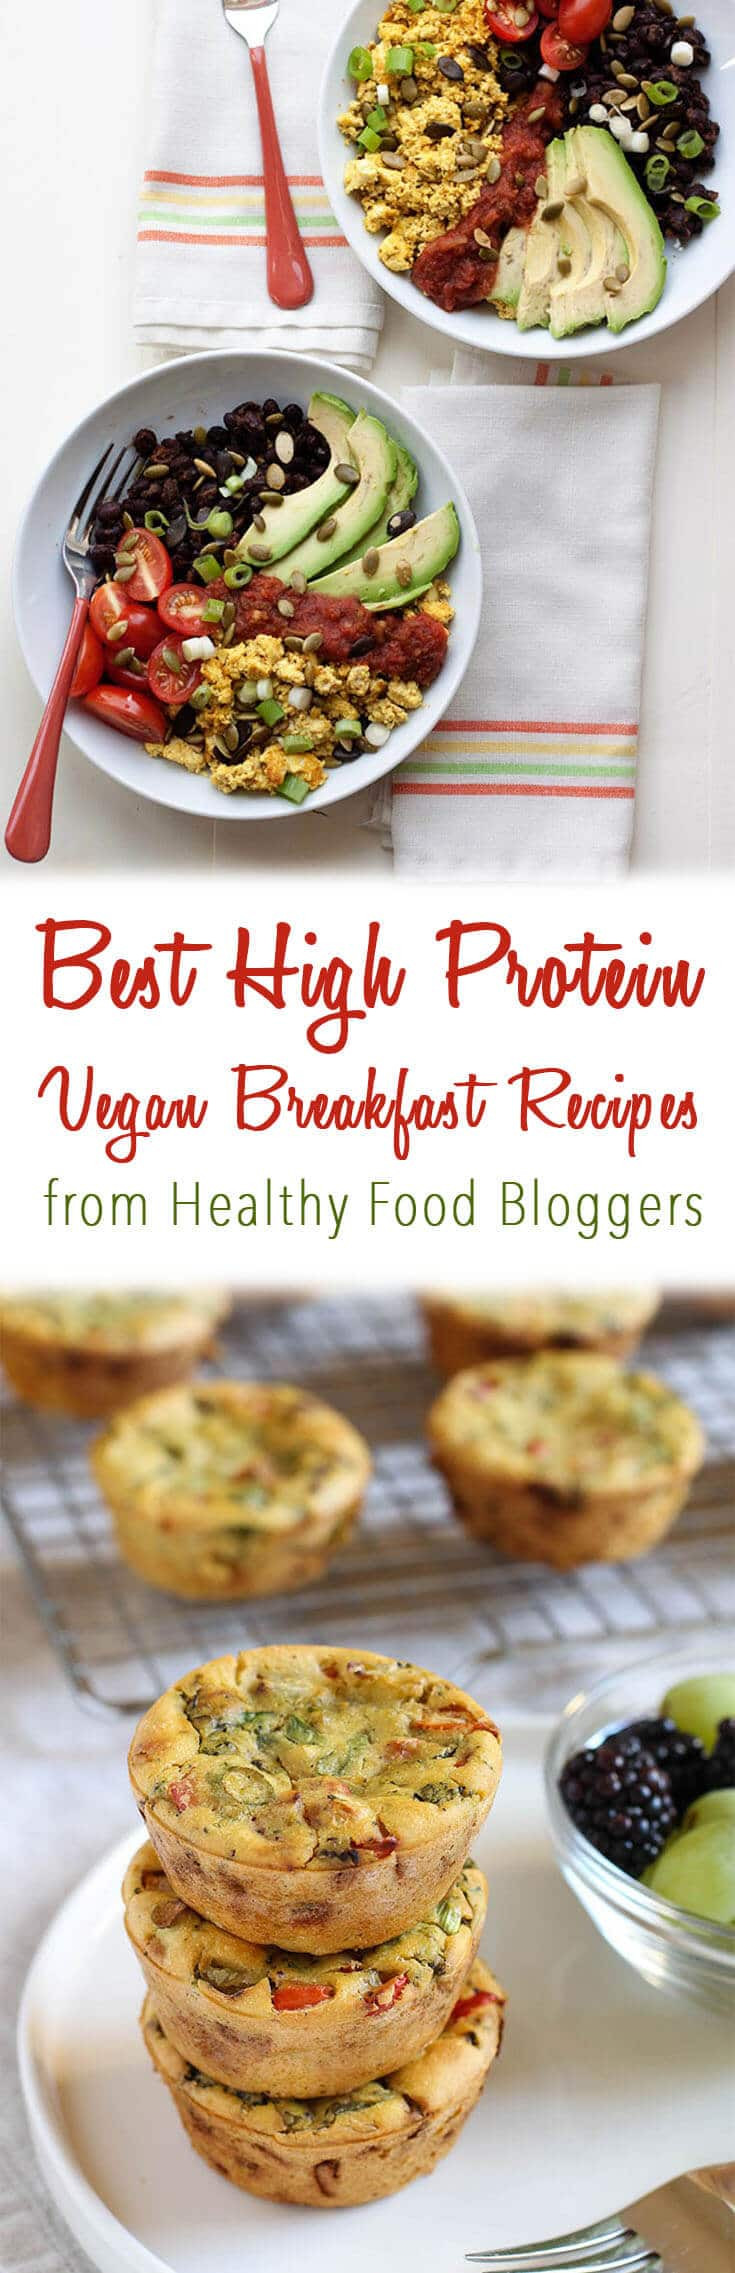 High Protein Vegetarian Snacks
 Best High Protein Vegan Breakfast Recipes from Healthy